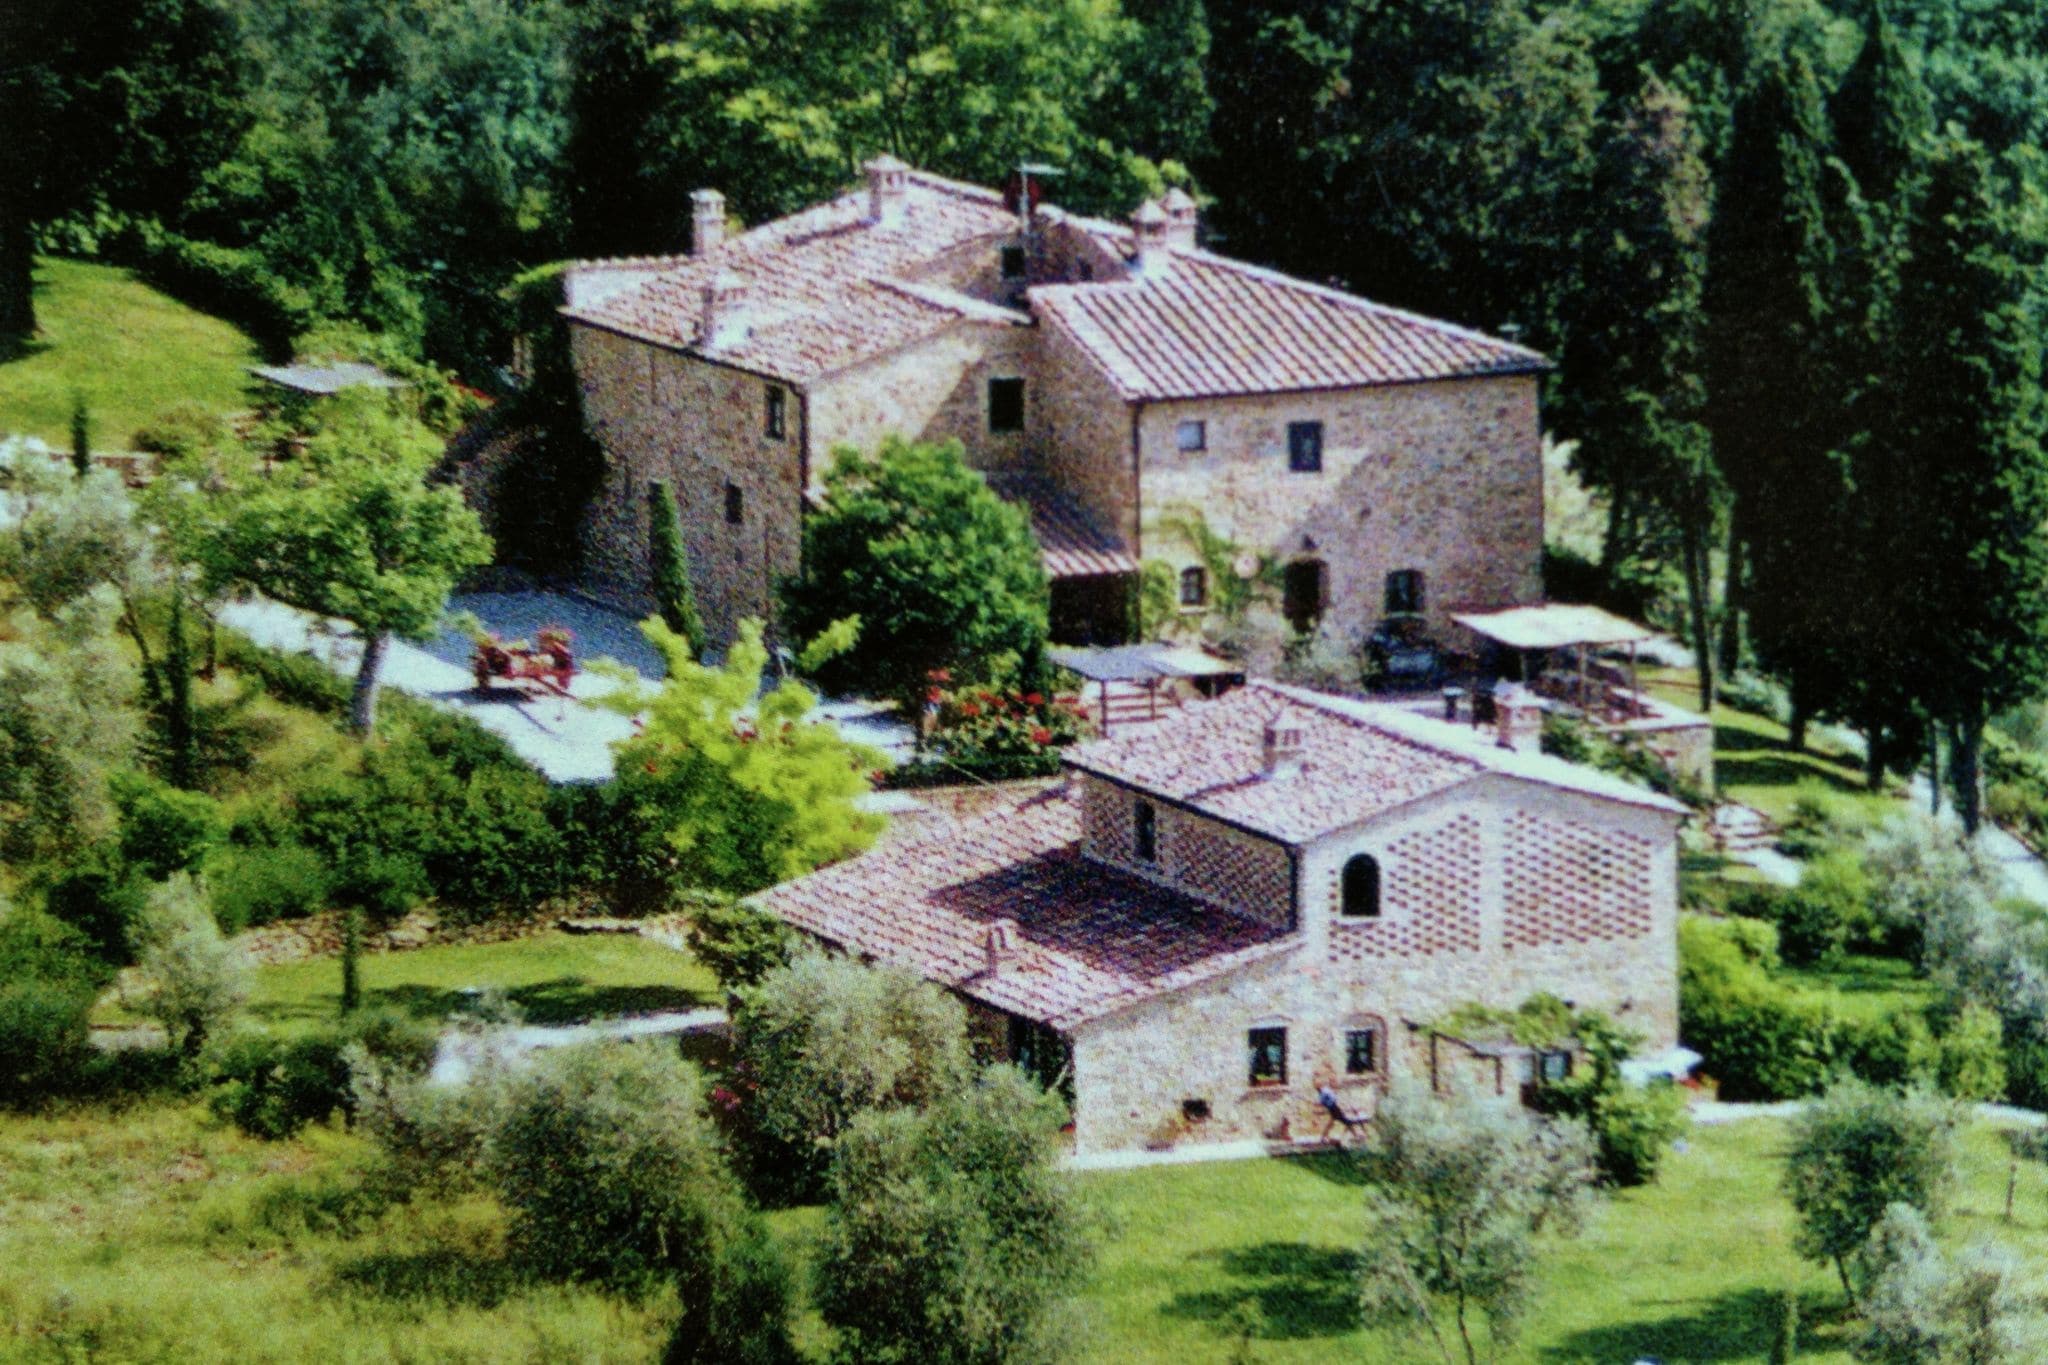 Romantische, charmante agritoerisme nabij het middeleeuwse dorp Montaione